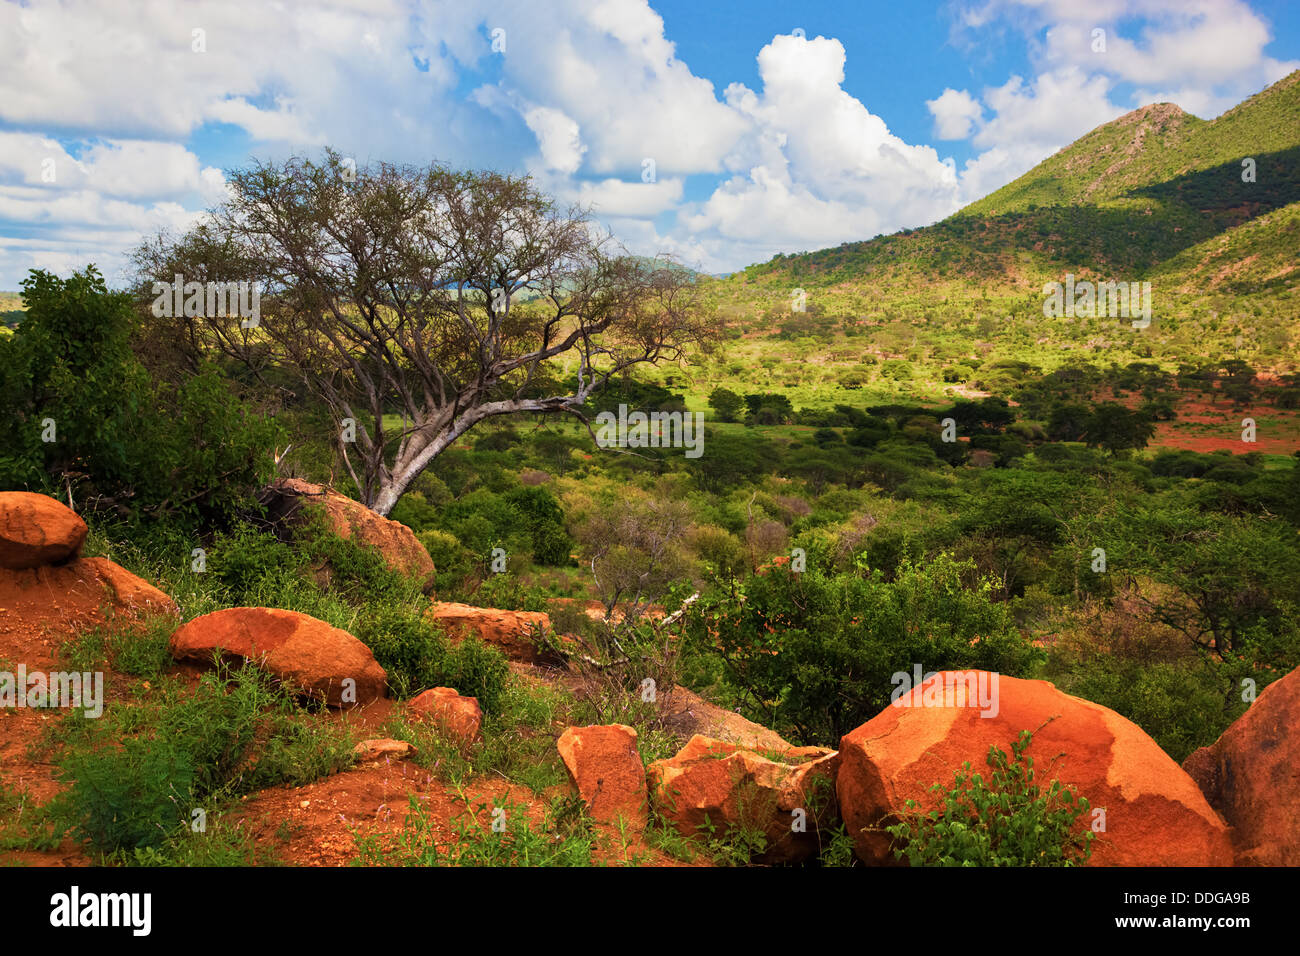 Bush and savanna landscape in the Tsavo West National Park, Kenya, Africa. Stock Photo